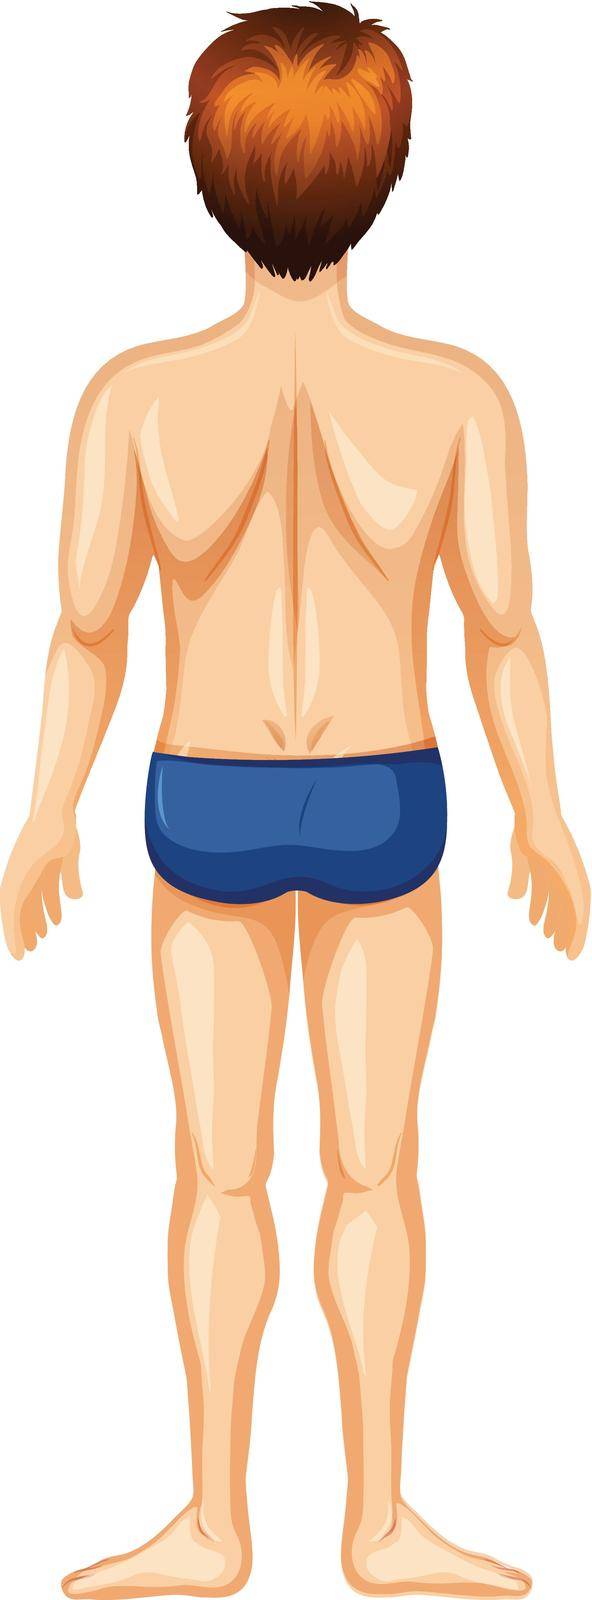 A Back of Man Body illustration